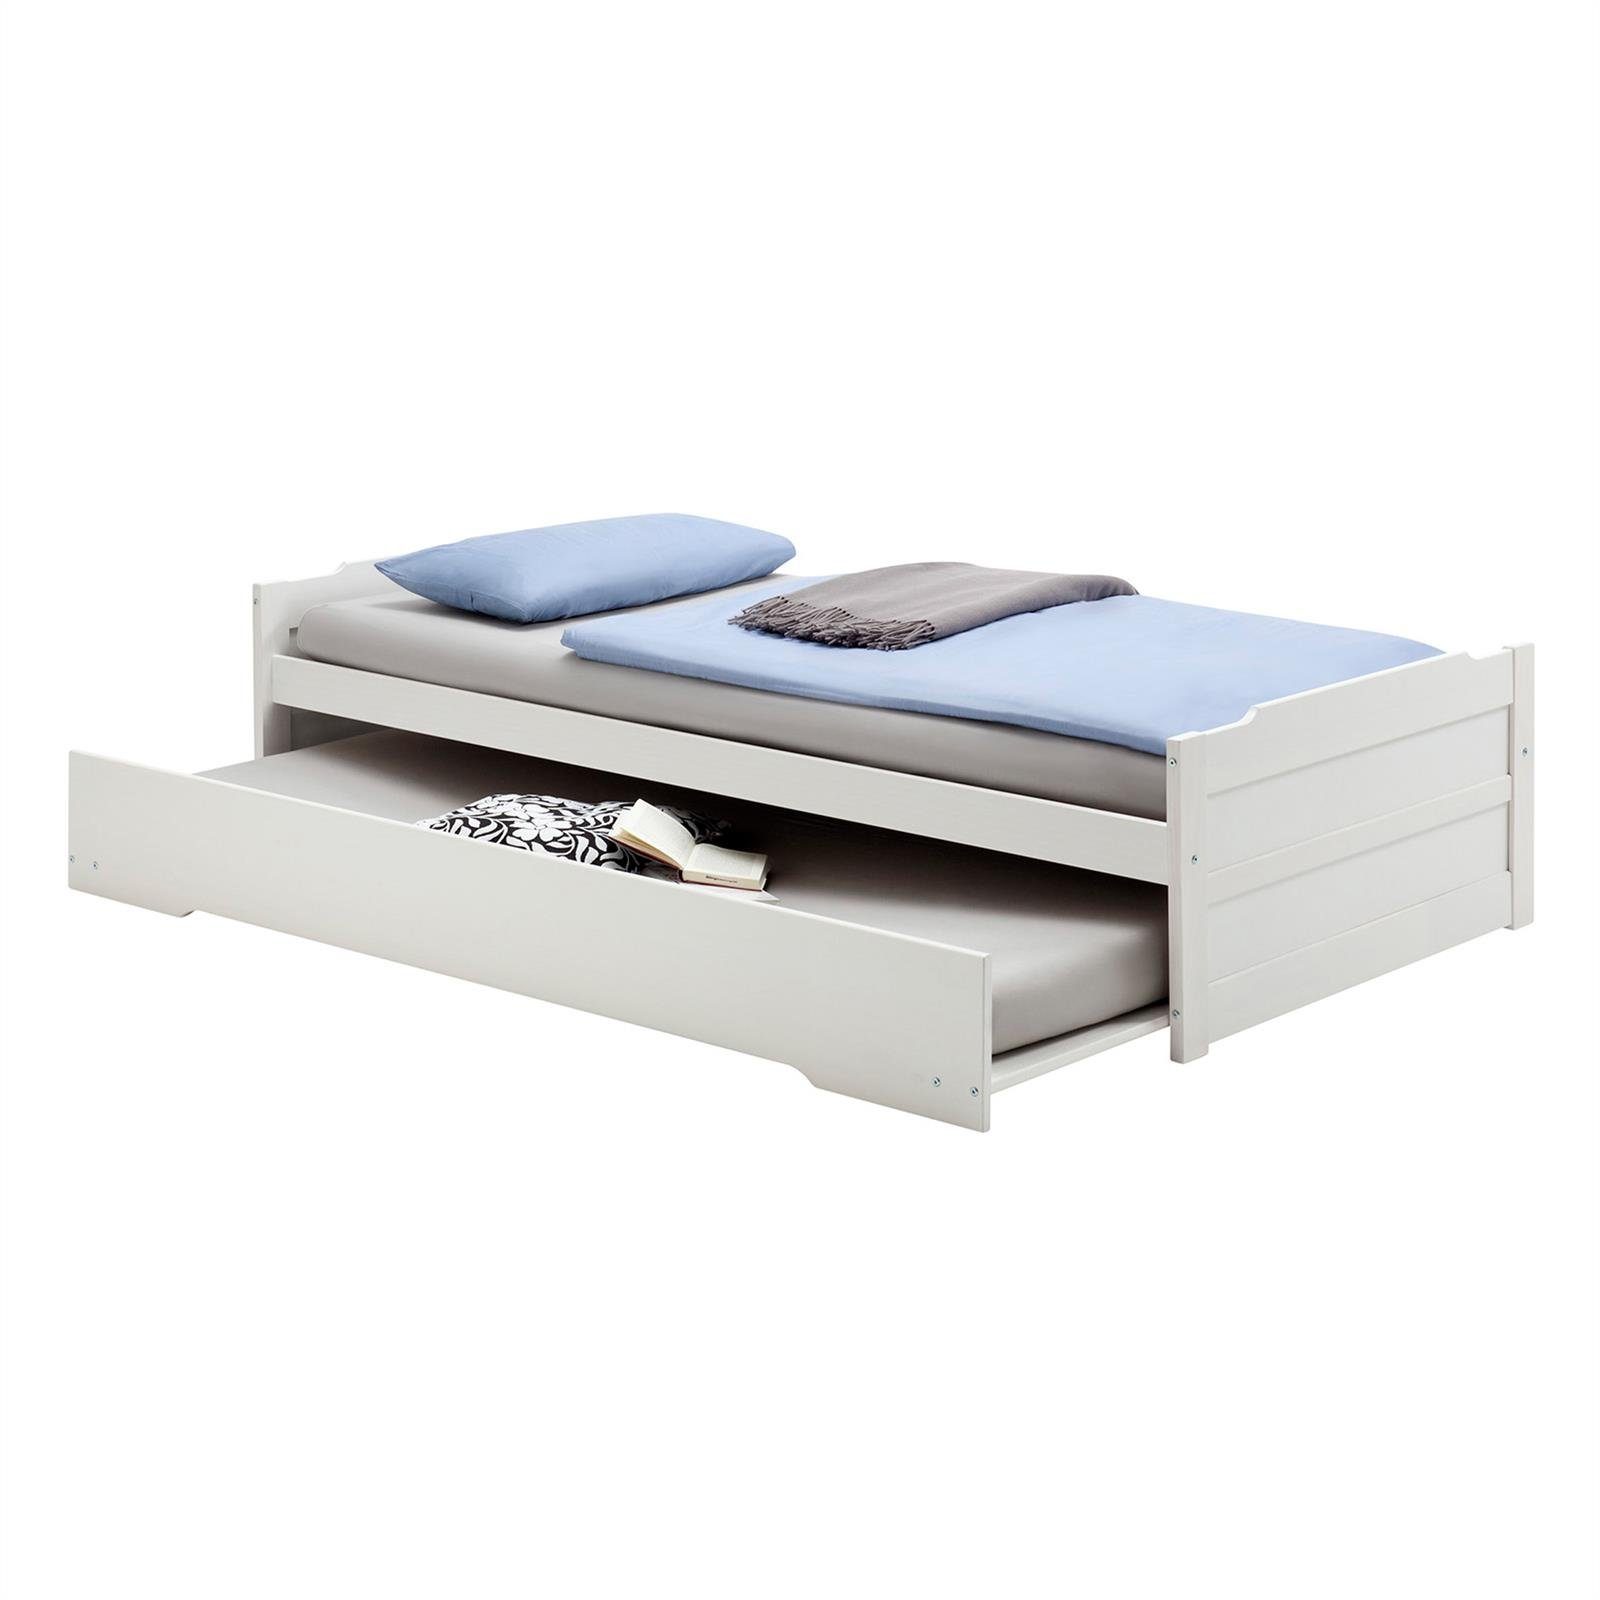 IDIMEX Funktionsbett mit Jugendbett Bett Bett Tagesbett weiß cm Ausziehbett 90x190 Stauraum LORENA